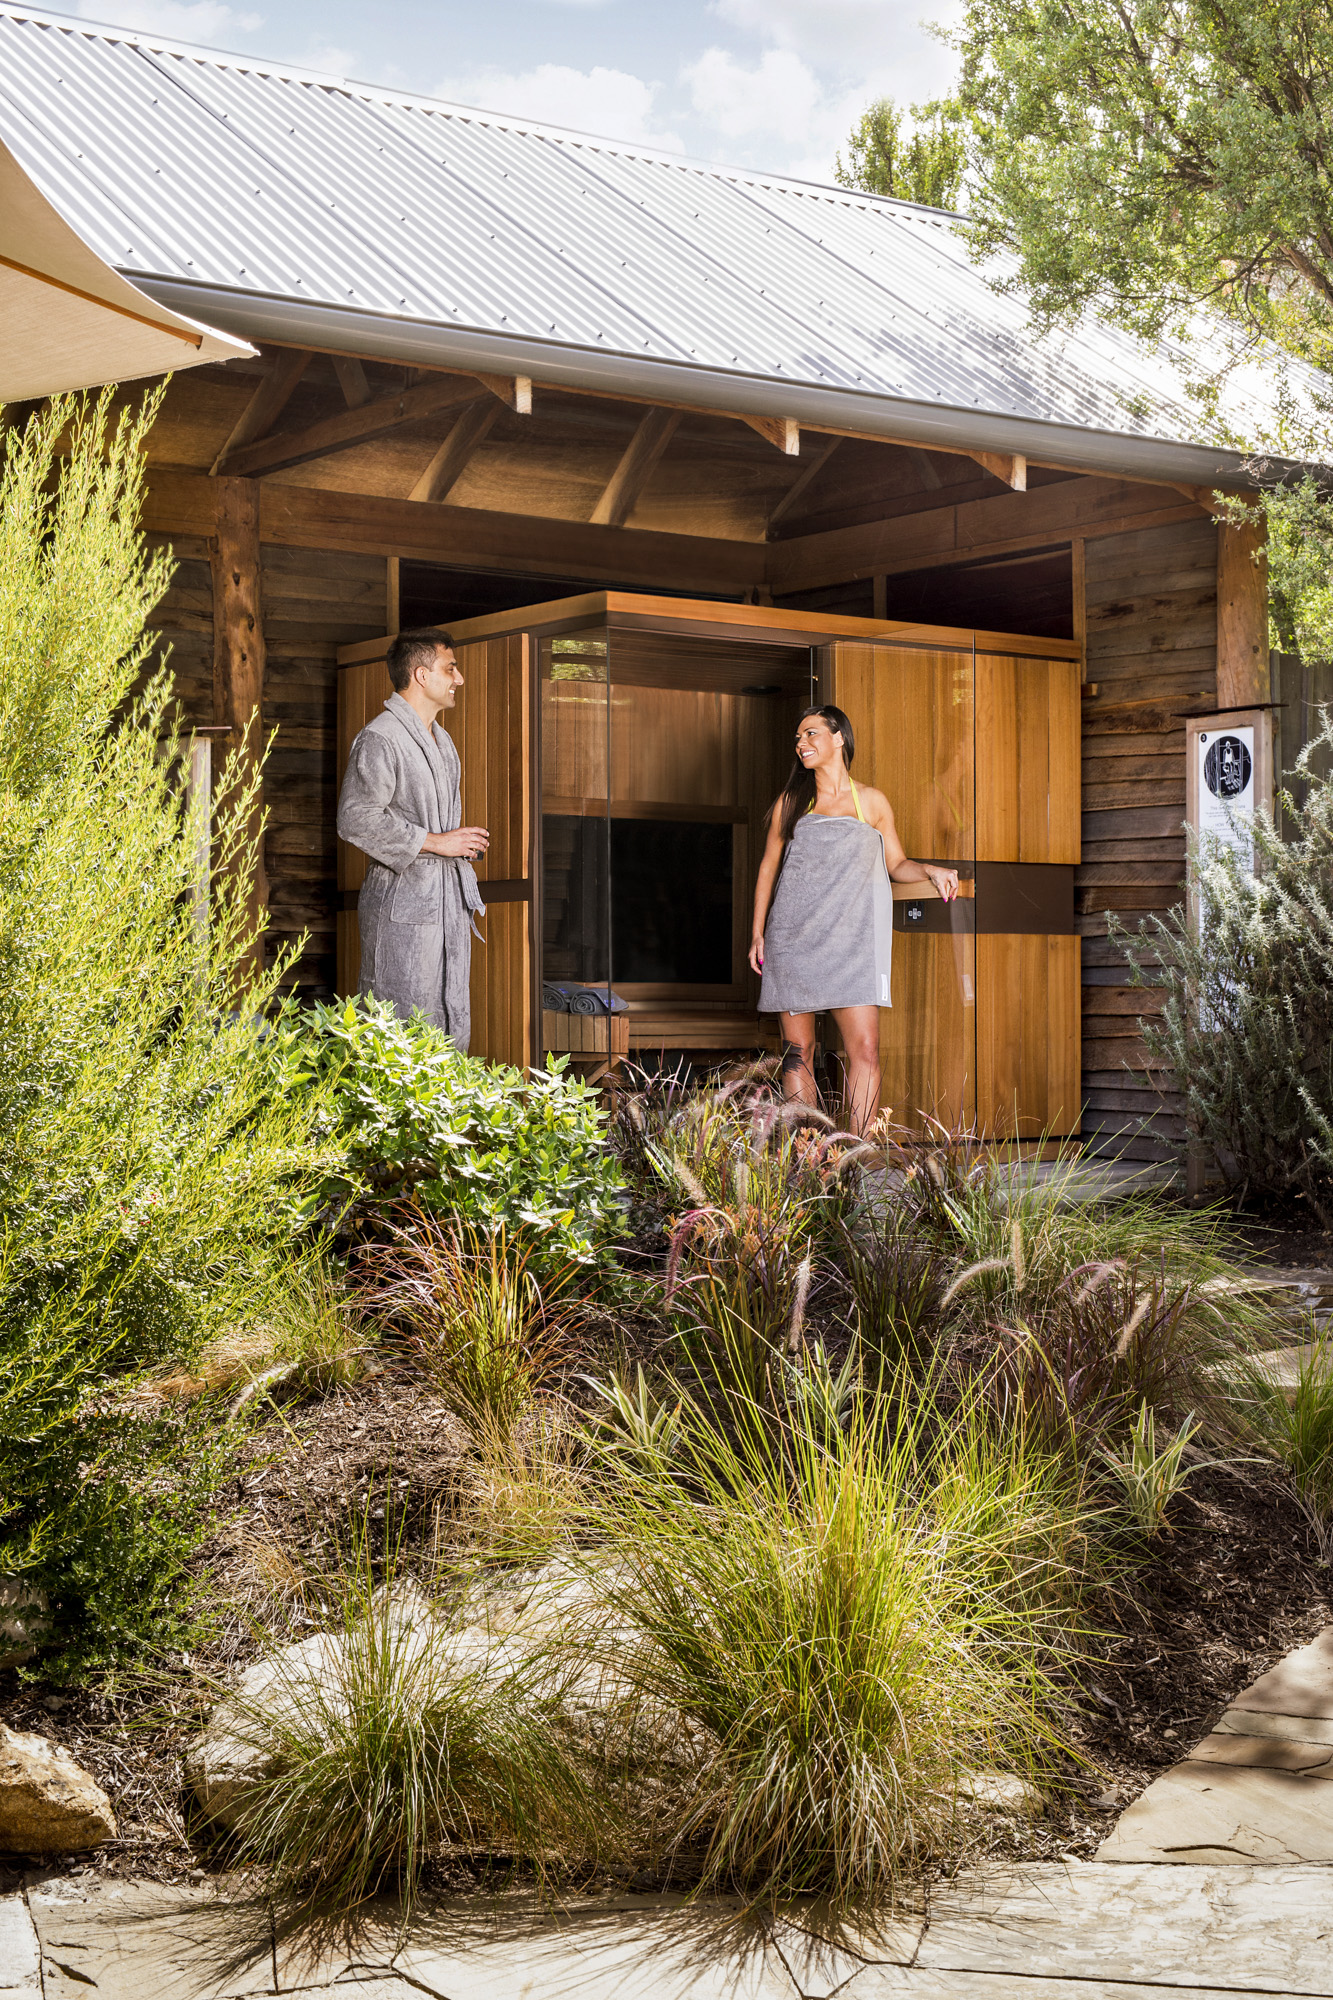 Sunlighten® Upgrades Your Personal Sauna Experience